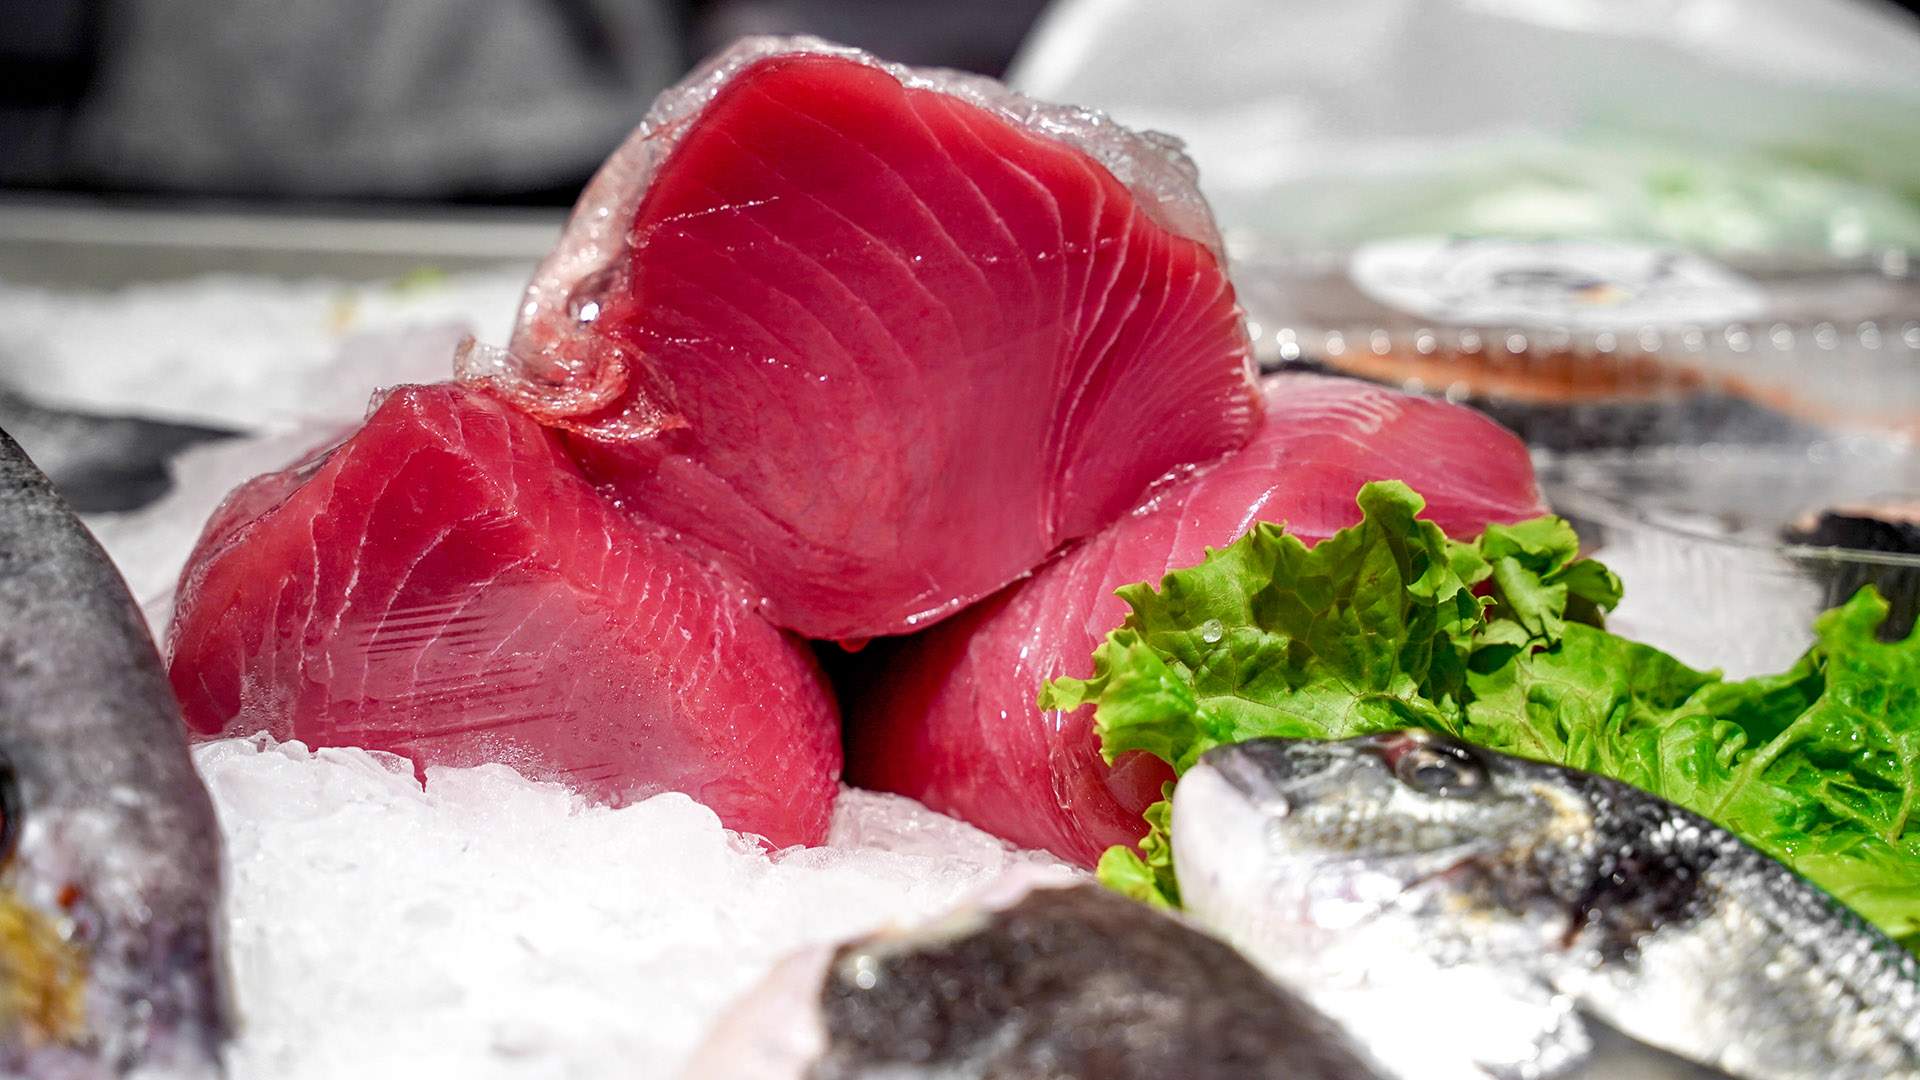 A Slice of Tuna